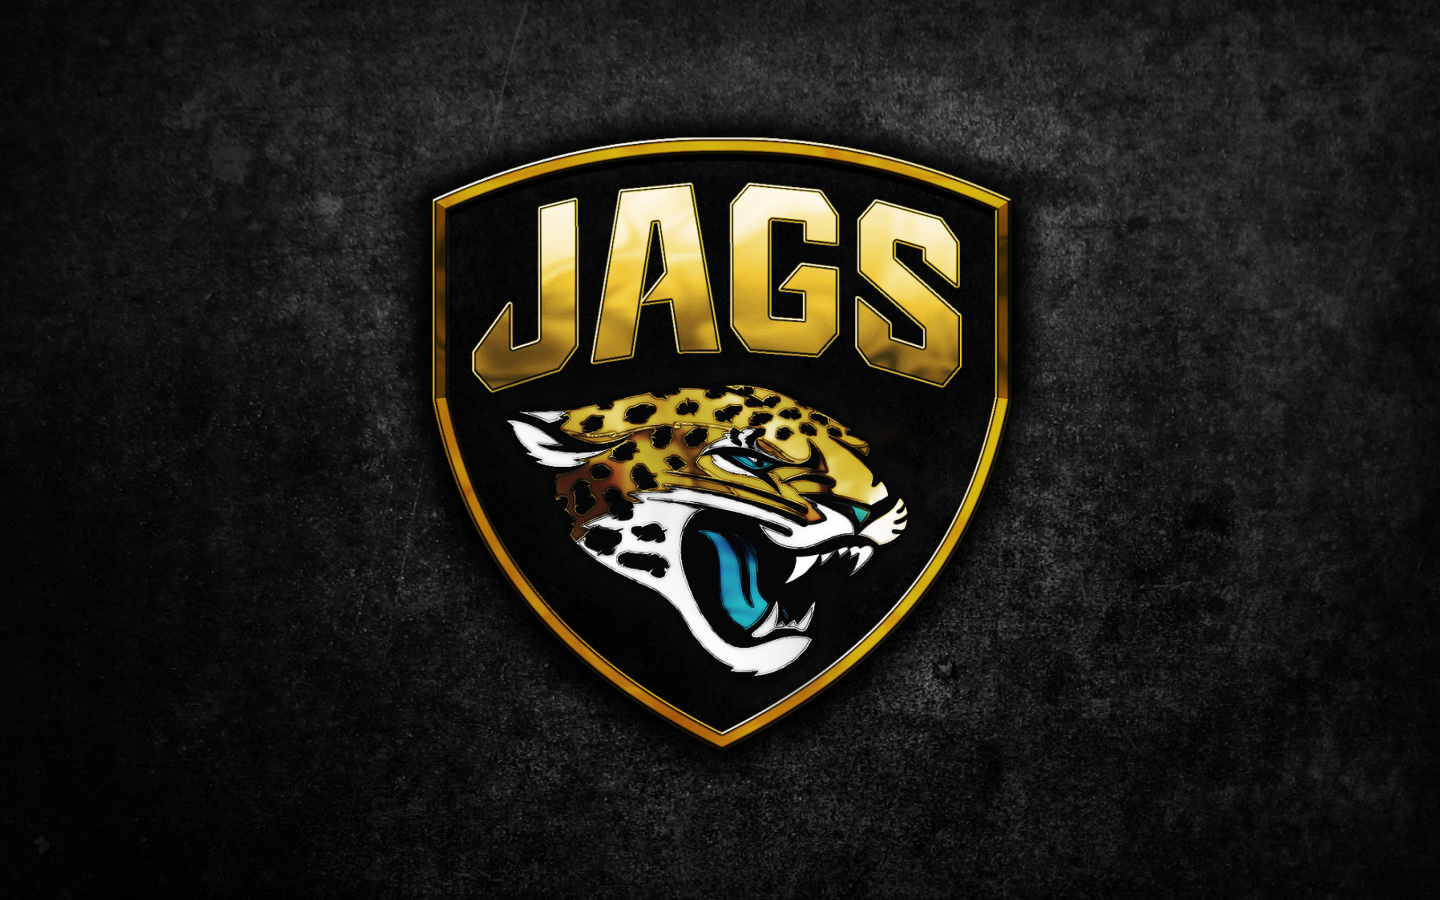 Jacksonville Jaguars NFL Team Logo wallpaper 1440x900